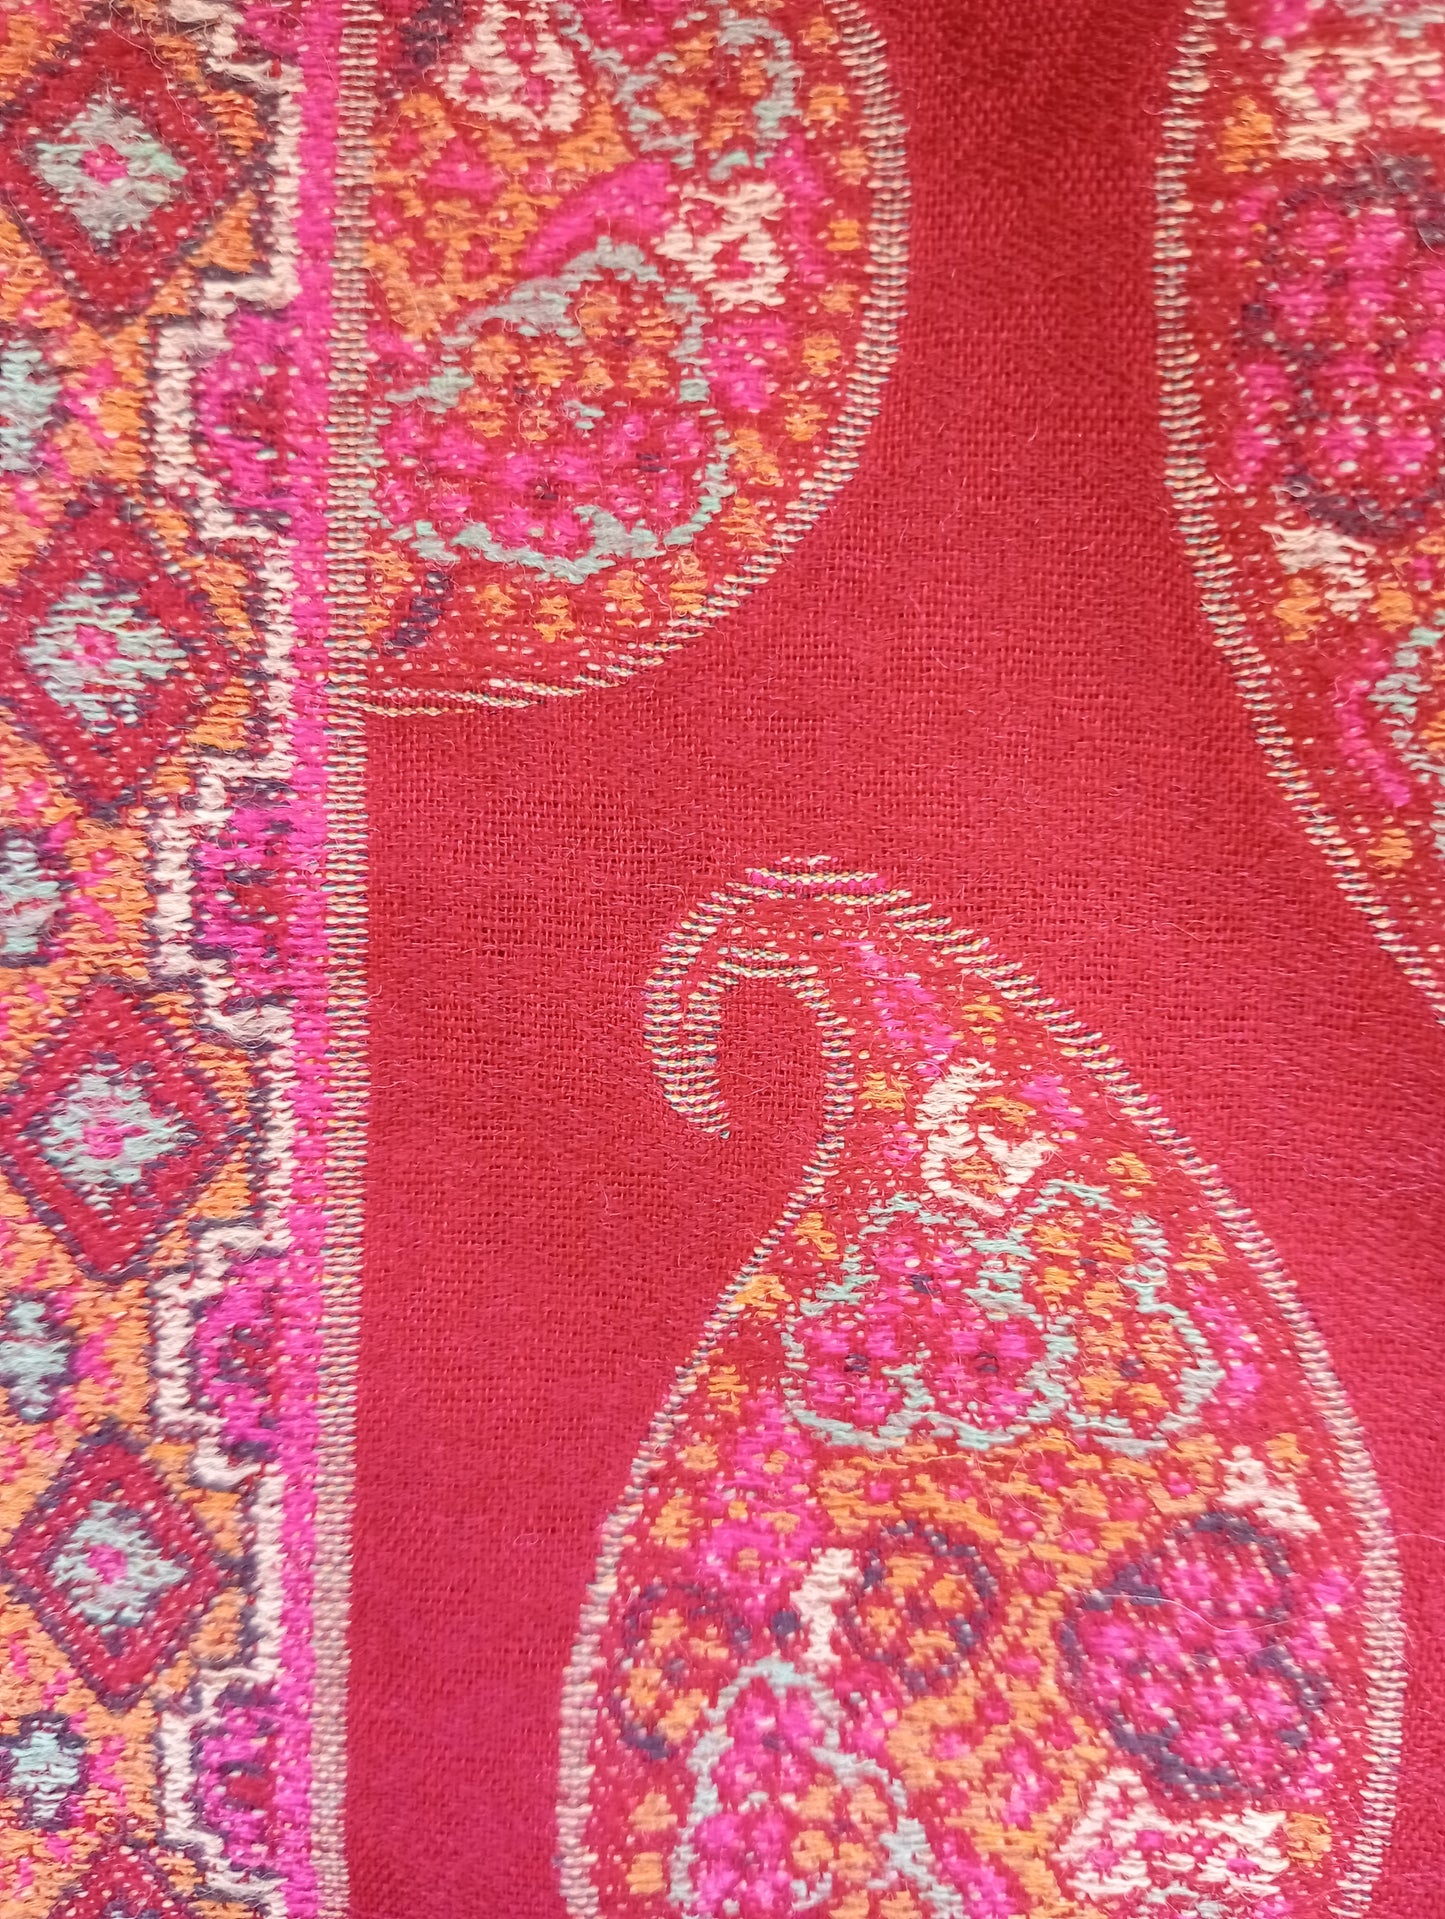 Exquisite Ambi (small) design shawl